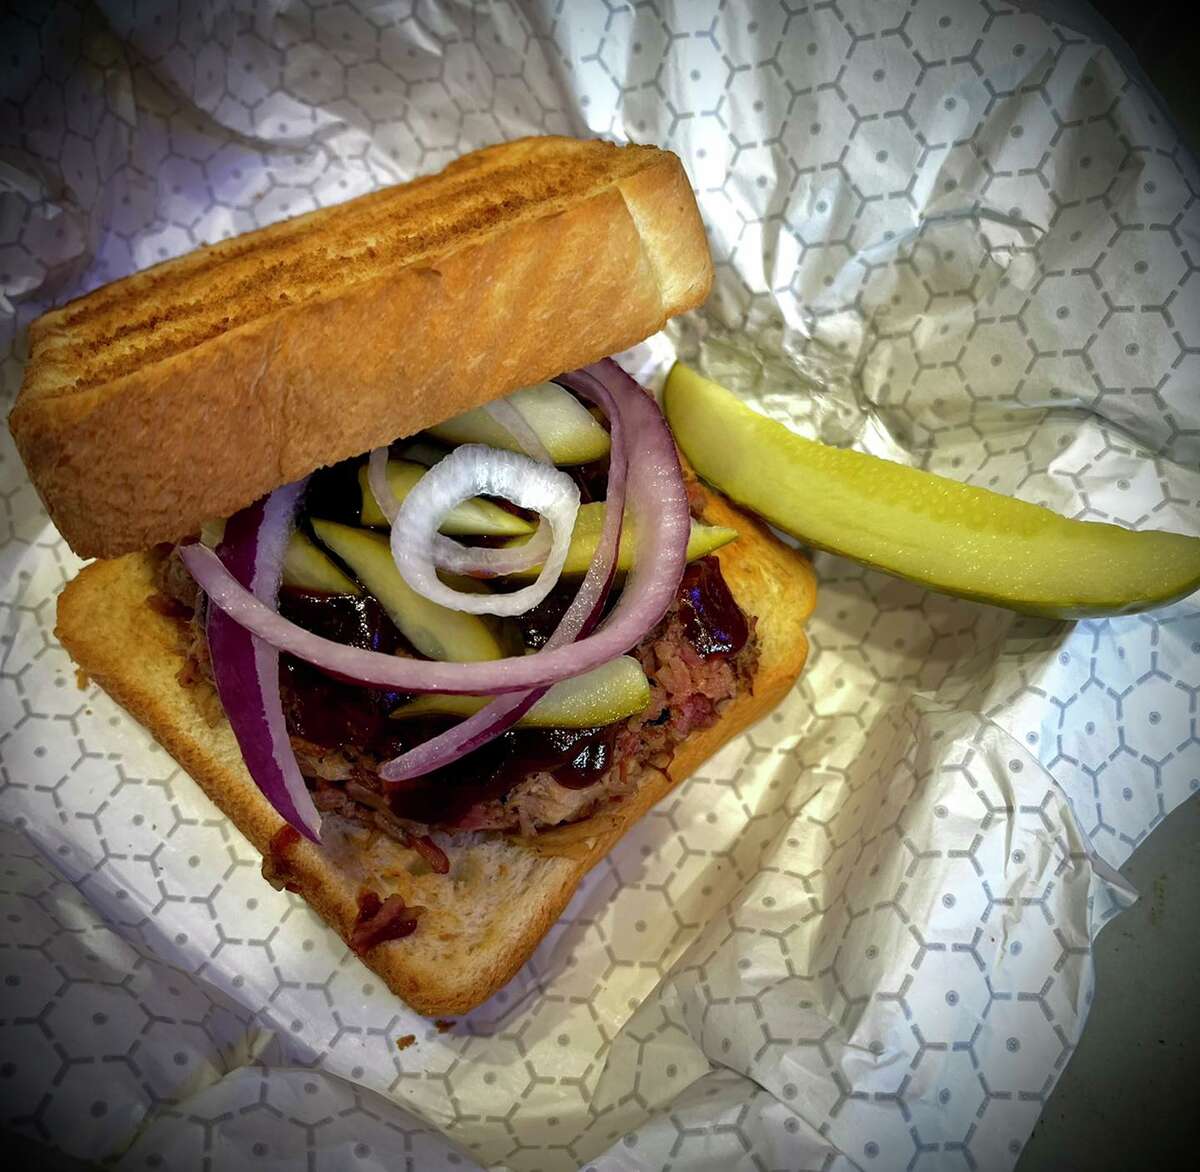 Broadway Deli's San Antonio sandwich